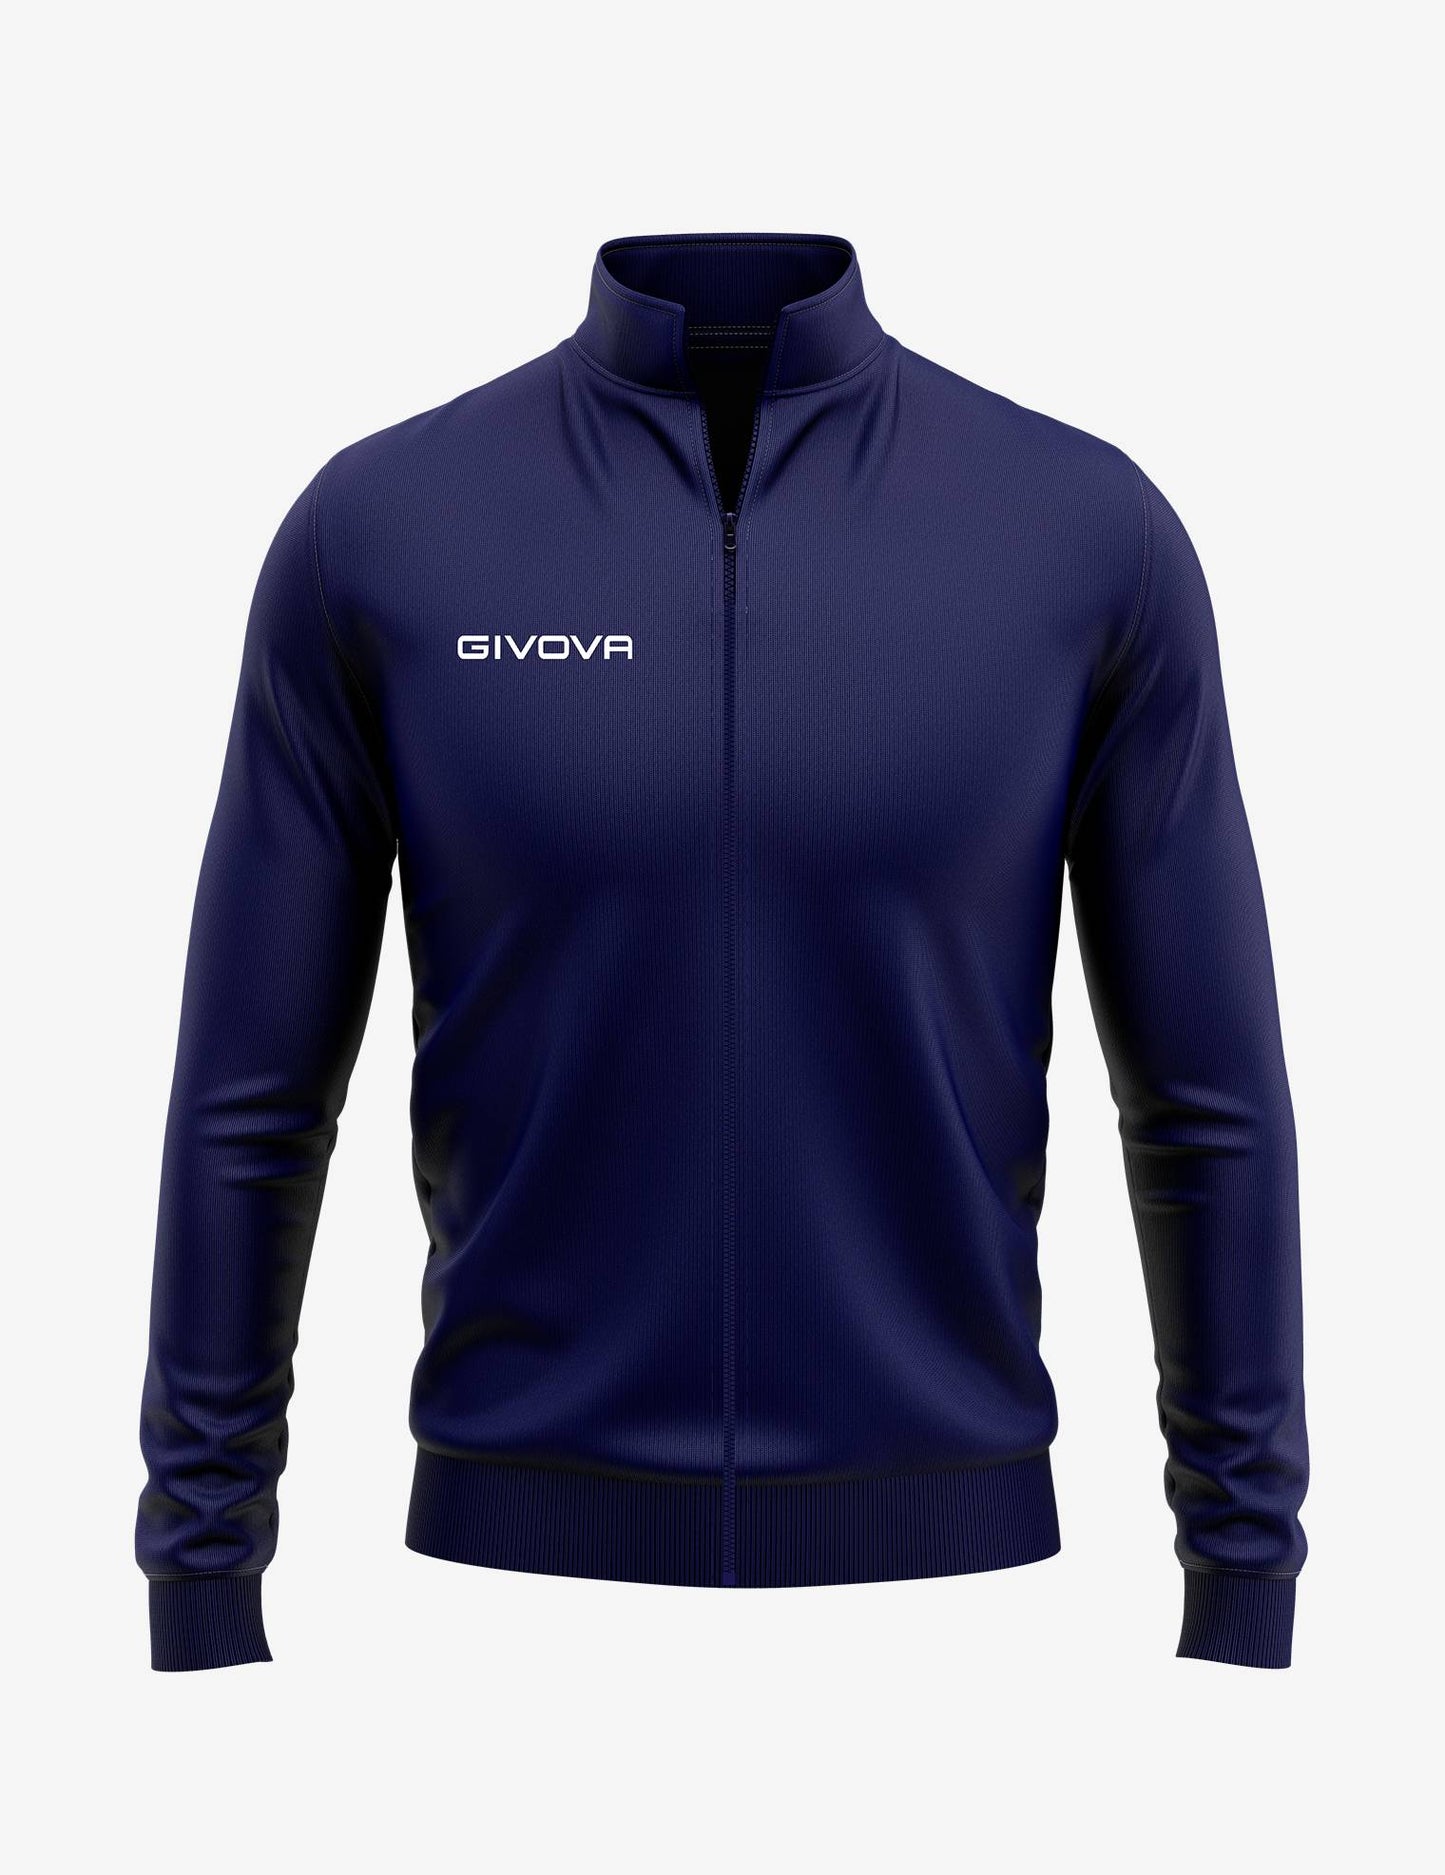 Givova men's jacket Shirt City New Sweatshirt navy M 